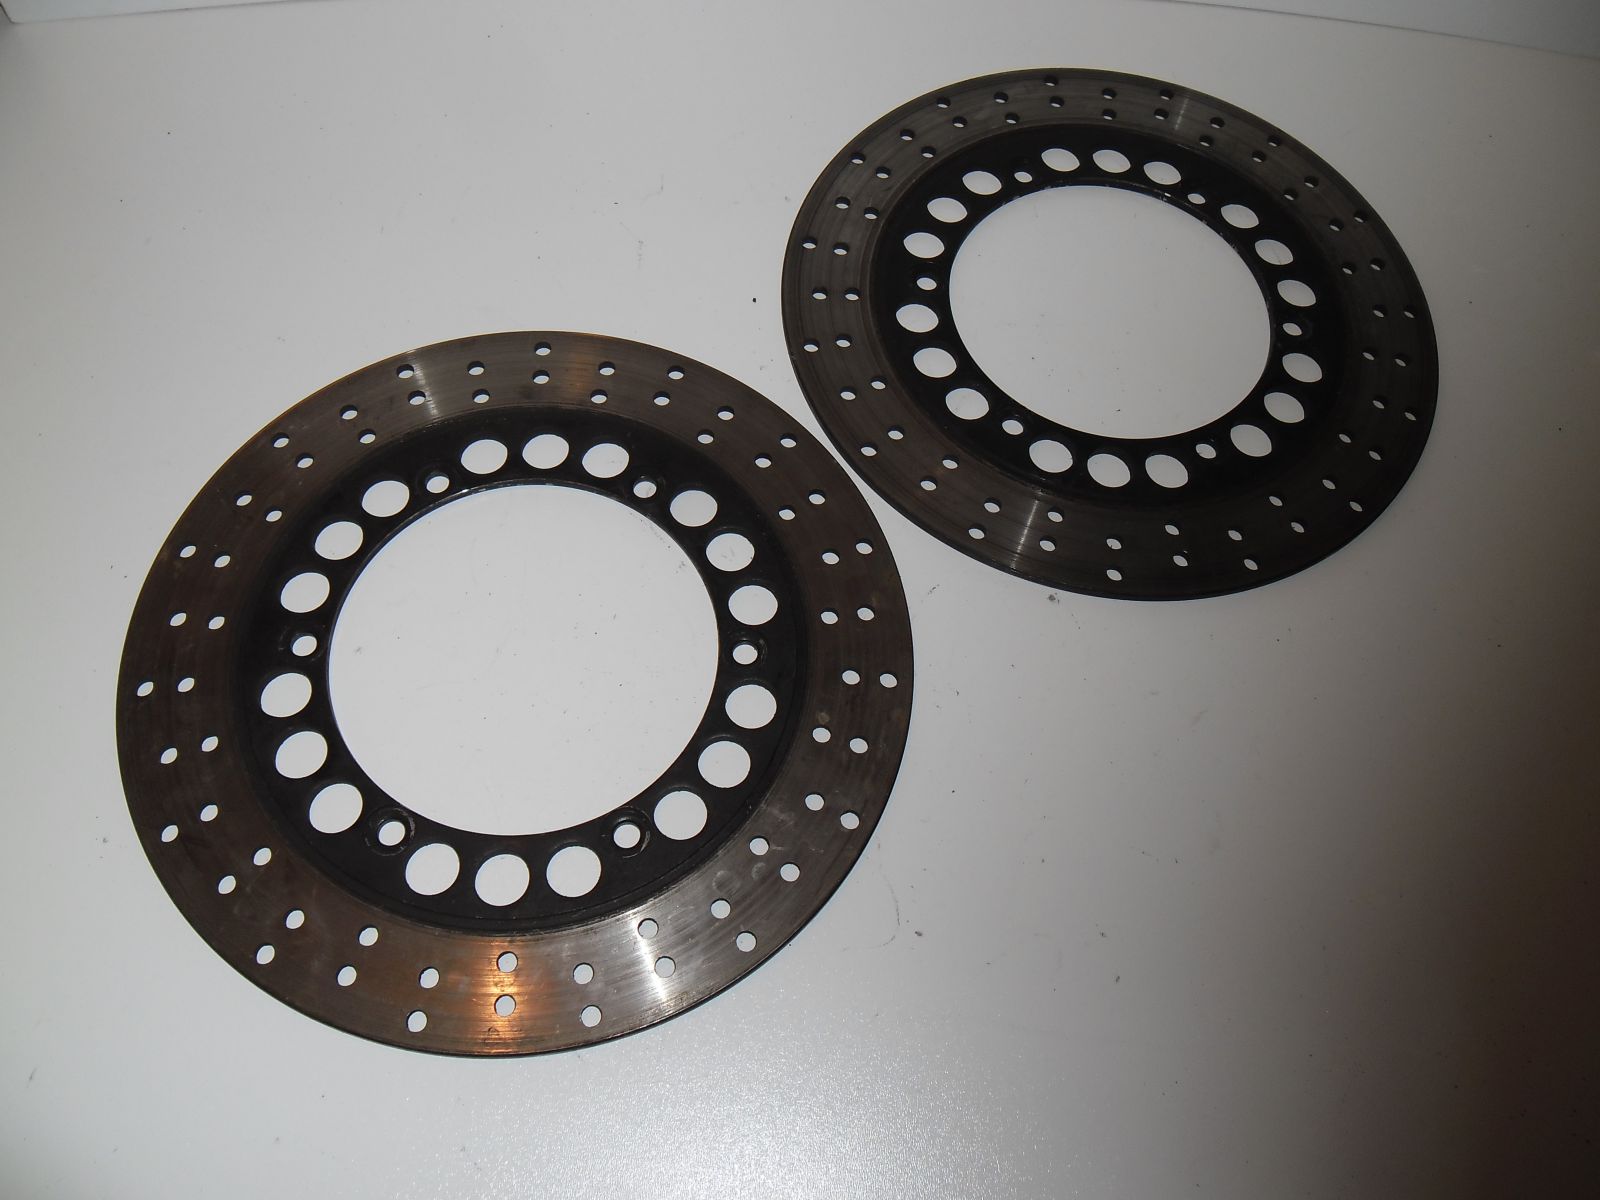 For Yamaha XJ900 brake discs